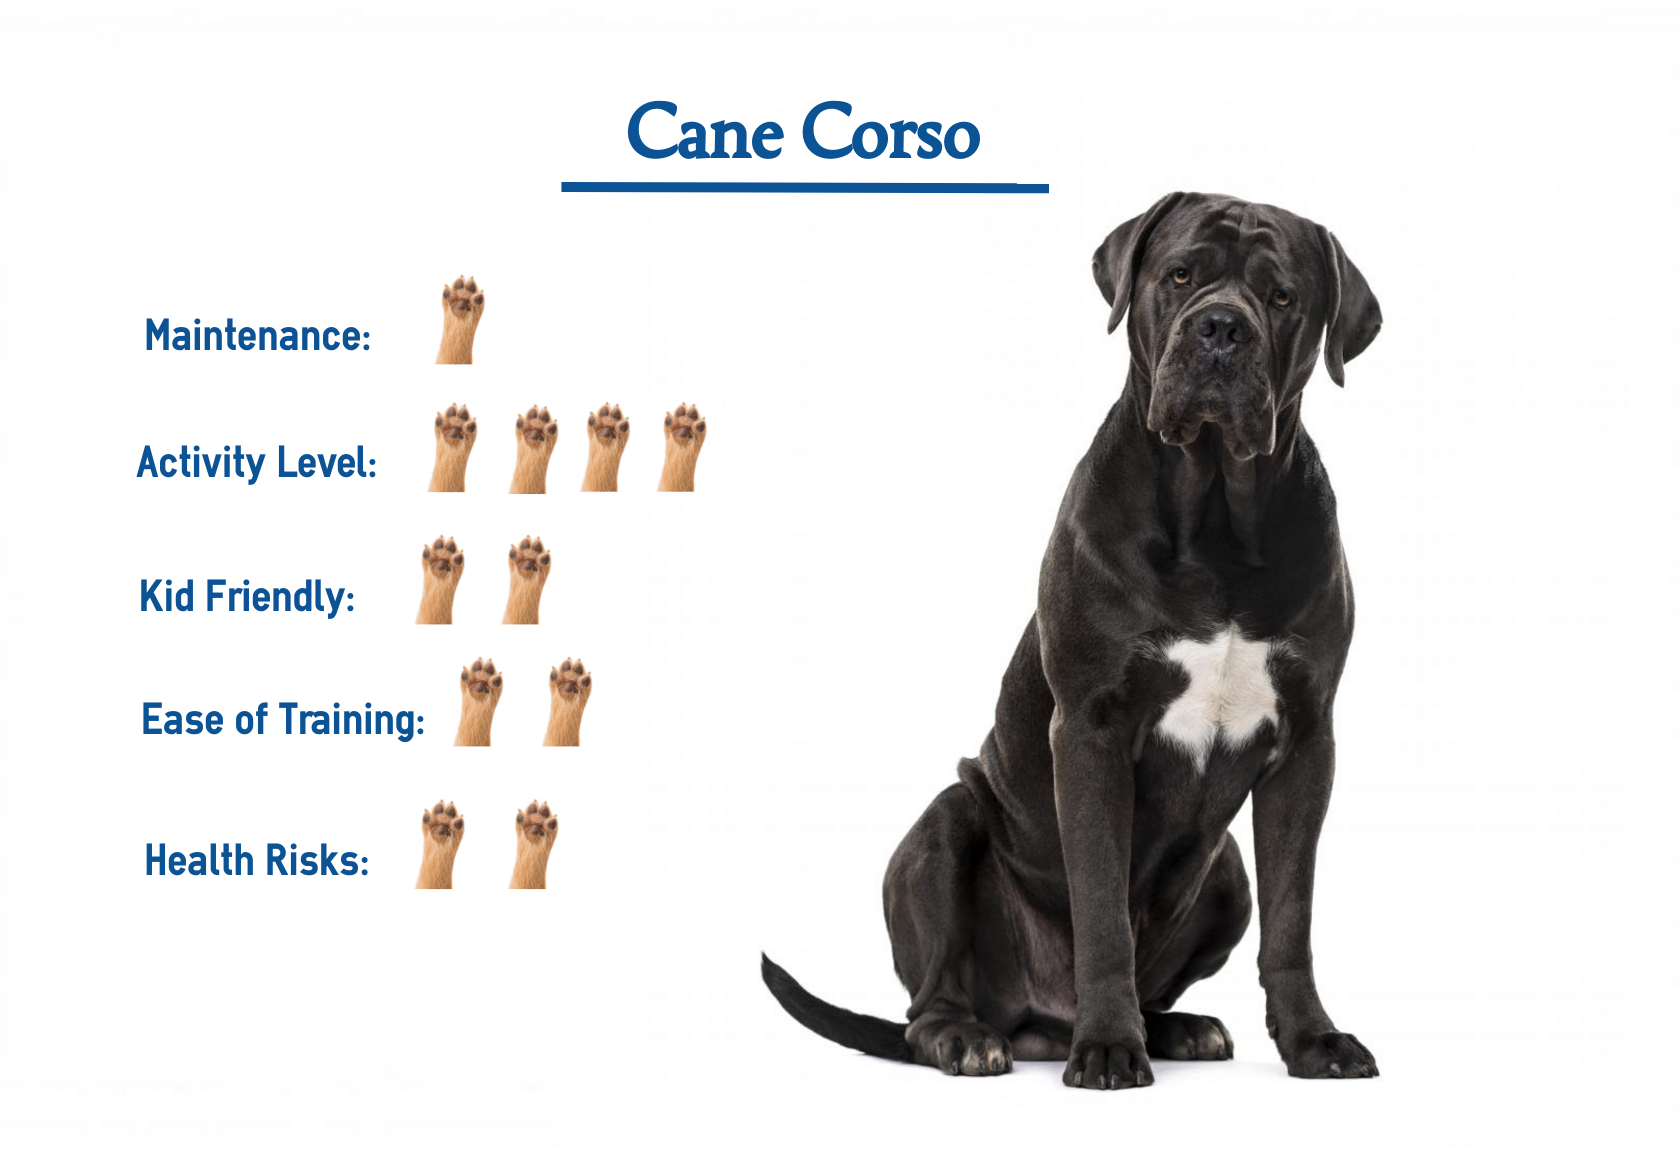 Cane Corso Longevity Study Announced